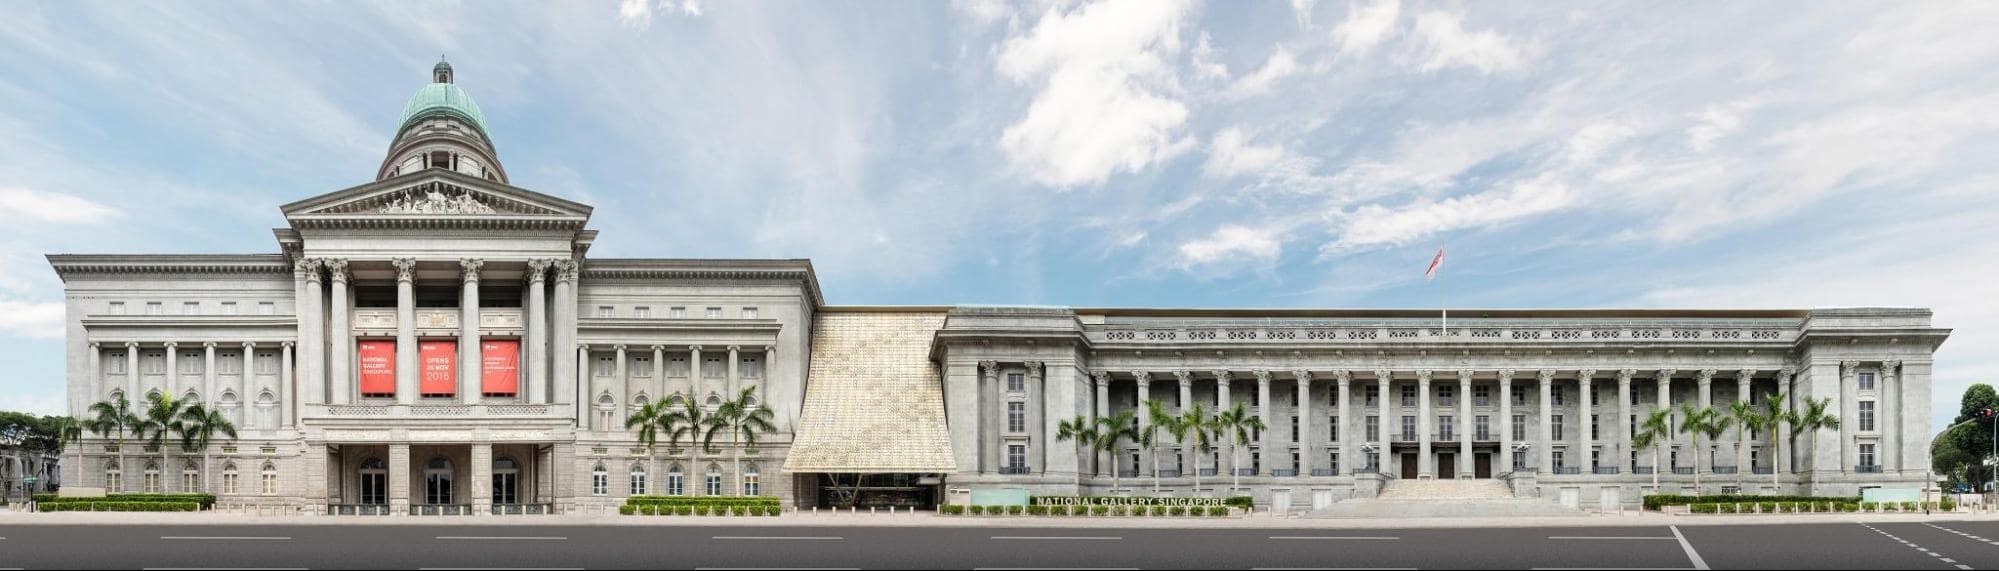 National Gallery Singapore secrets revealed - supreme court design